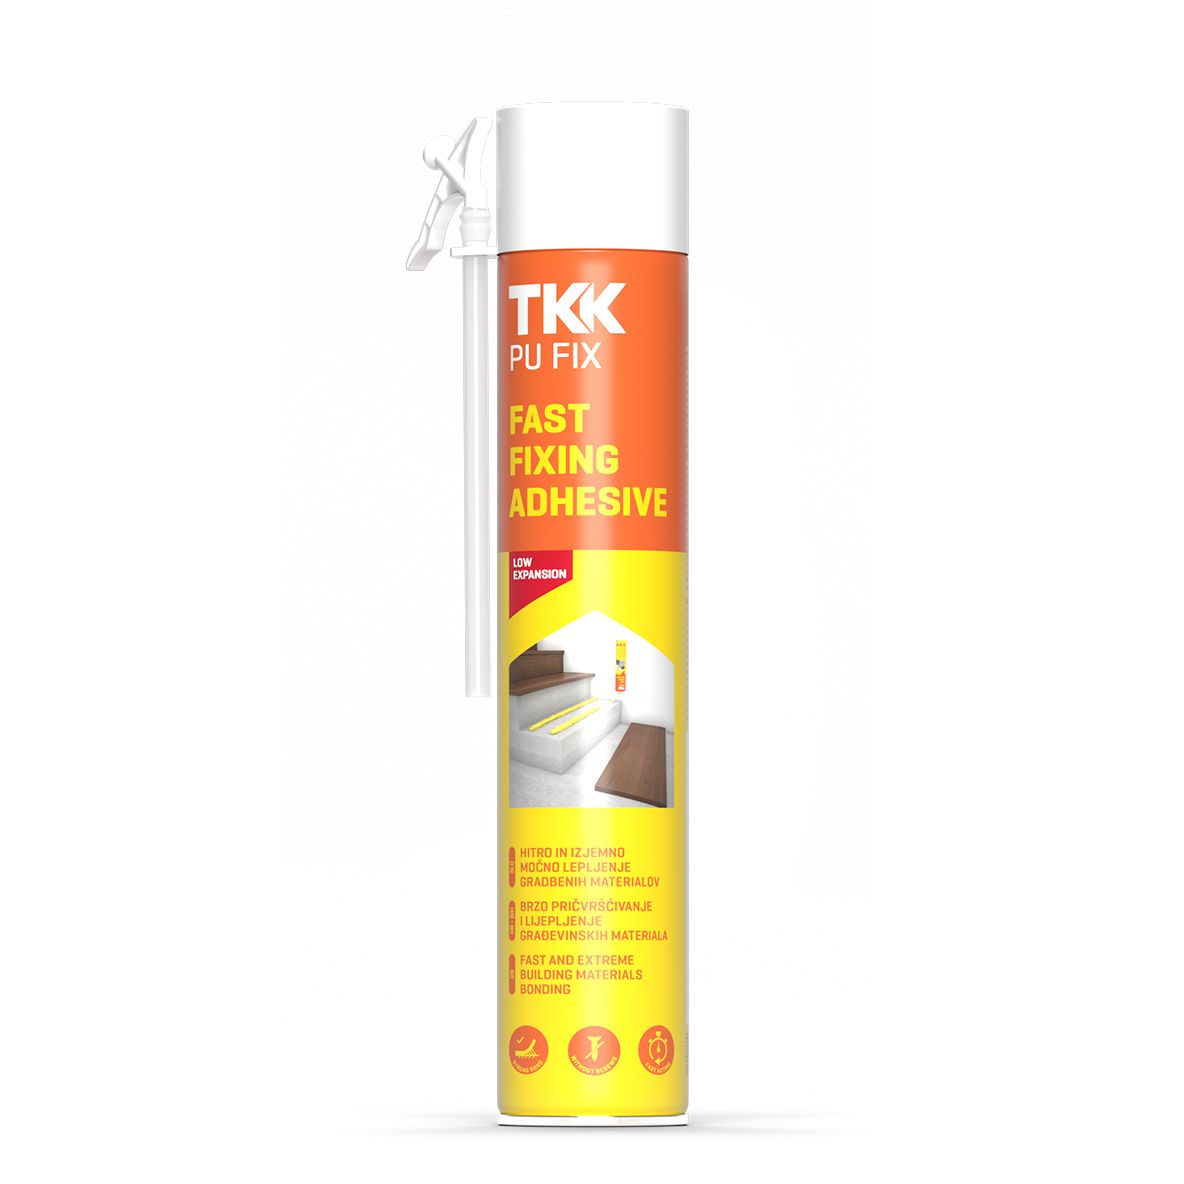 TKK Pu Fix Fast Fixing Adhesive H